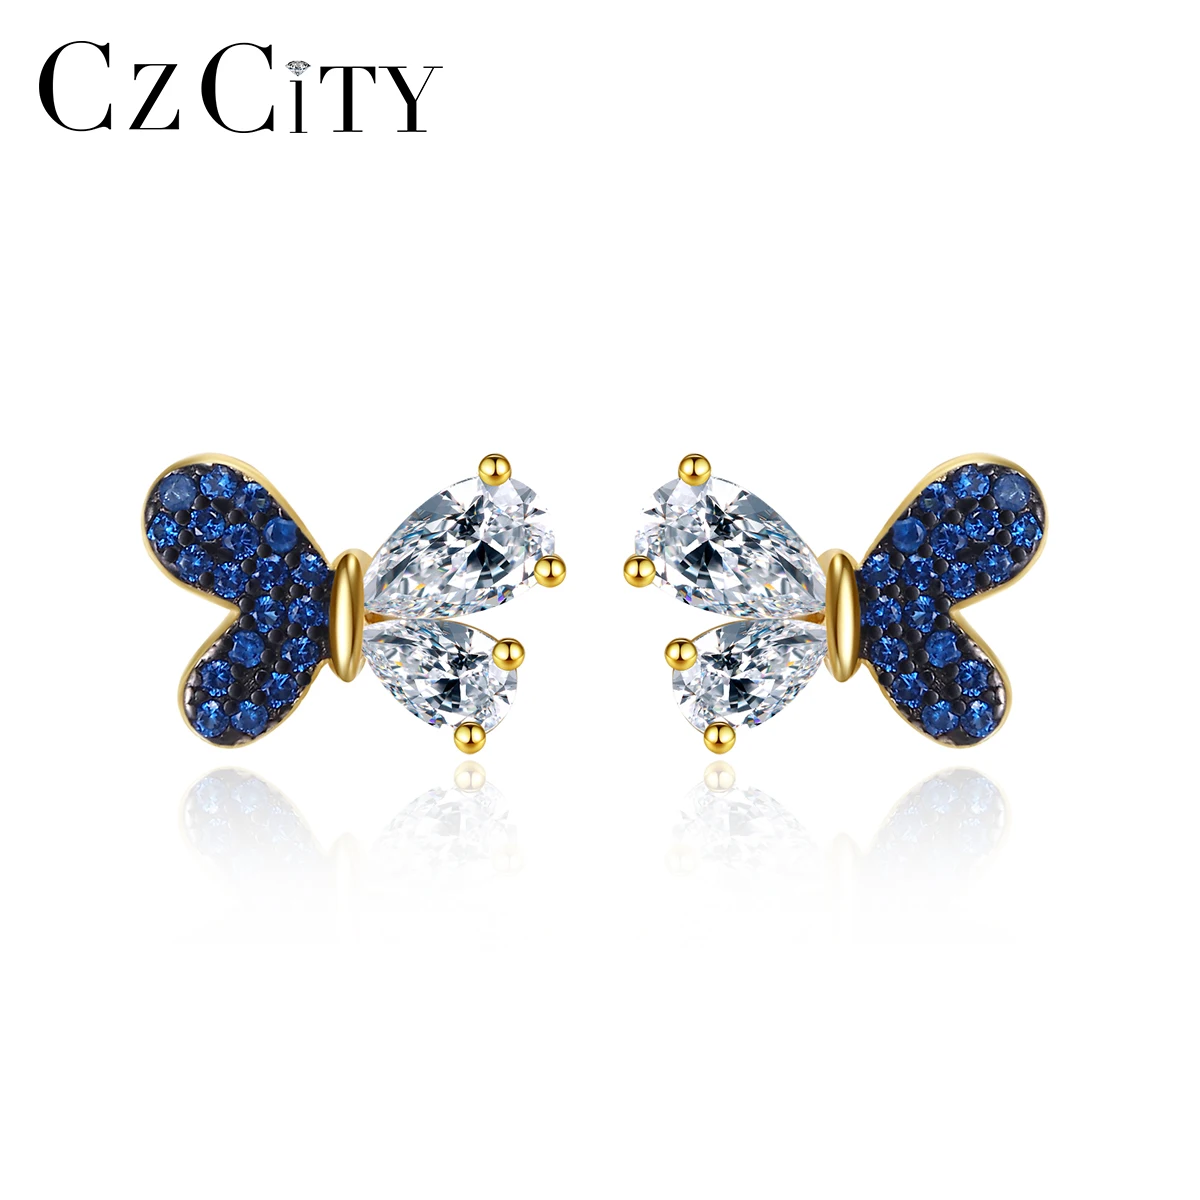 

CZCITY Sapphire Blue Cubic Zirconia 925 Sterling Silver Butterfly Stud Earrings Gold Plated Unusual Luxury Party Fine Jewelry